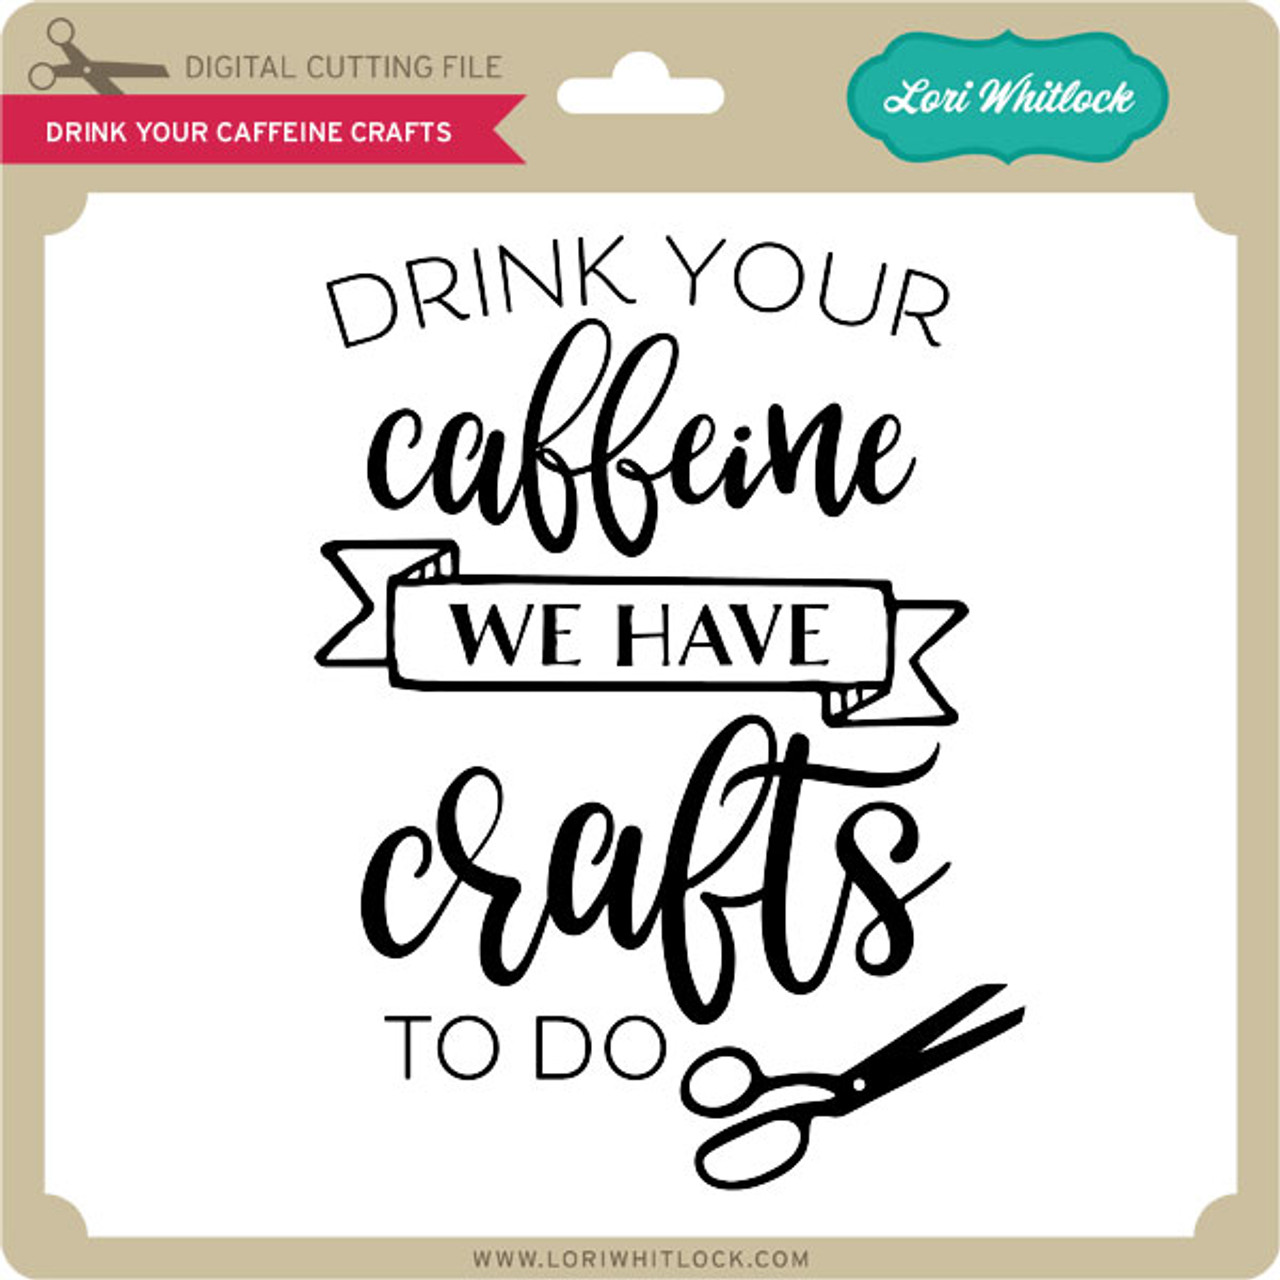 Mini Coffee Cup Holder Tree - Lori Whitlock's SVG Shop